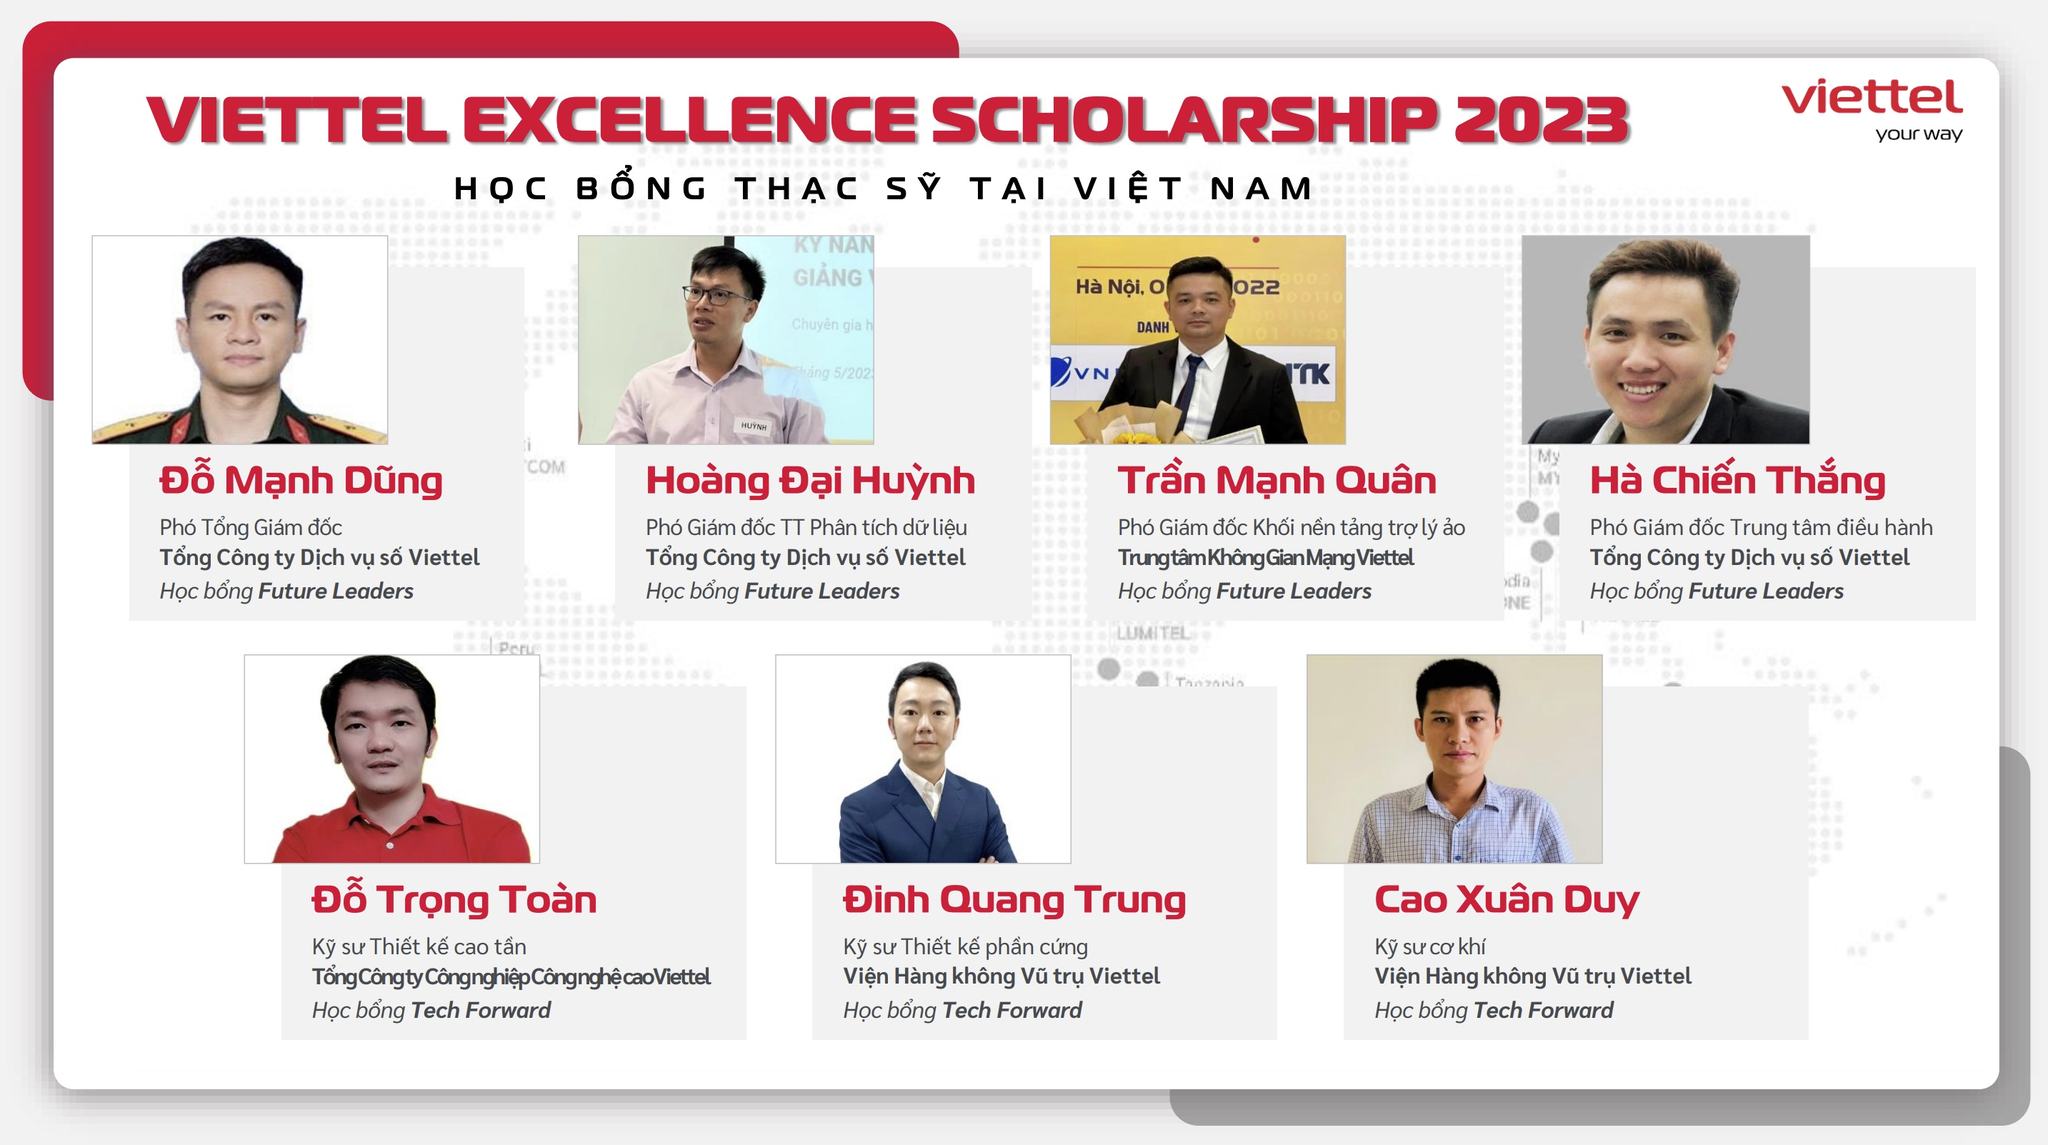 Viettel Excellence Scholarship 2